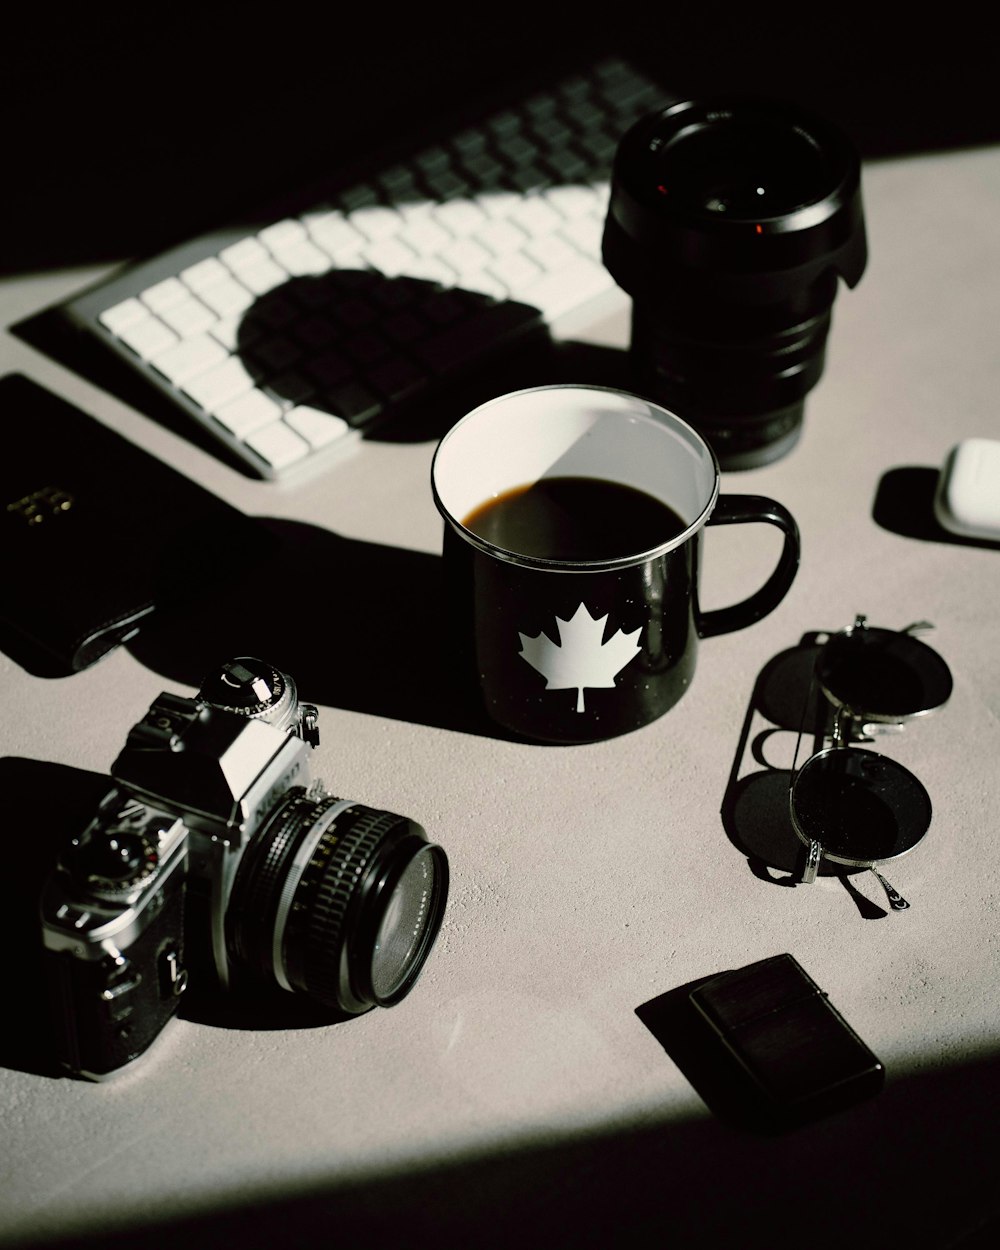 black dslr camera beside black ceramic mug on table